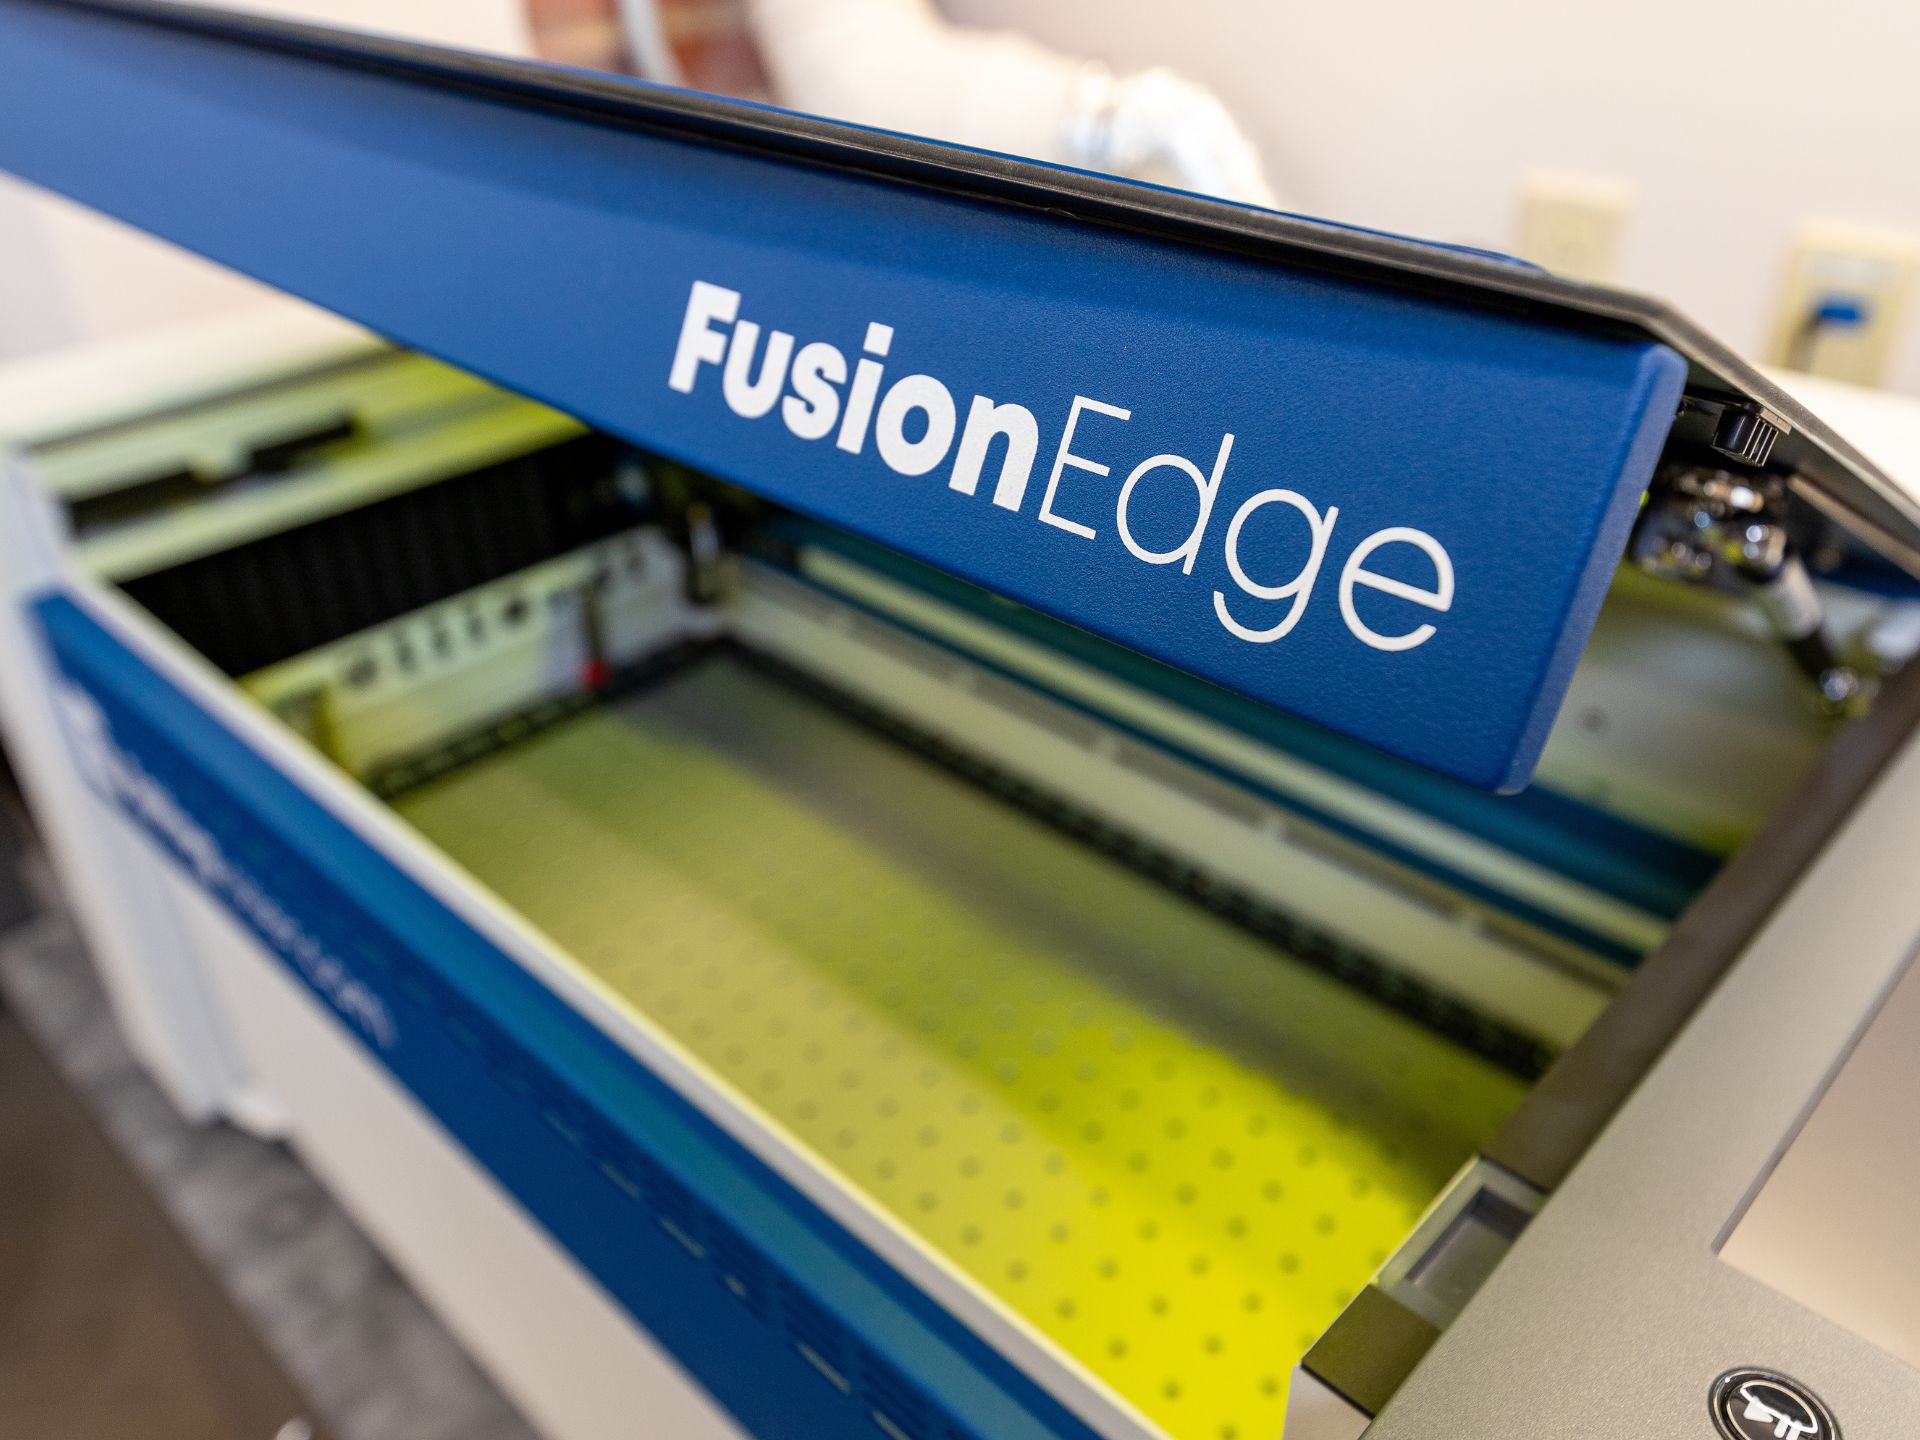 A FusionEdge laser cutter